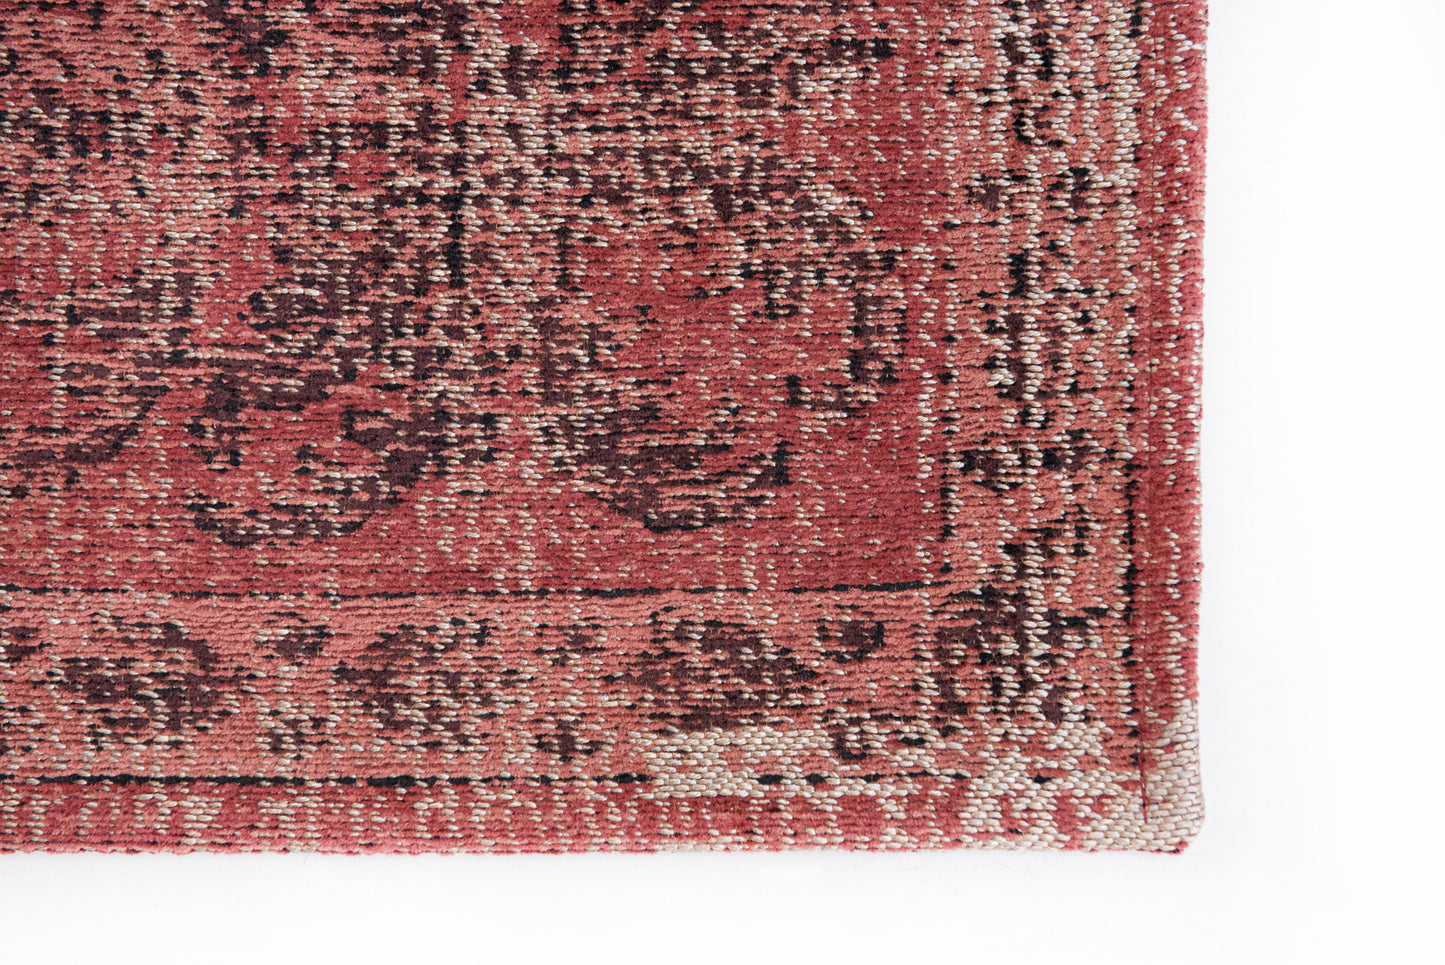 DAM-601: Jacquard carpet